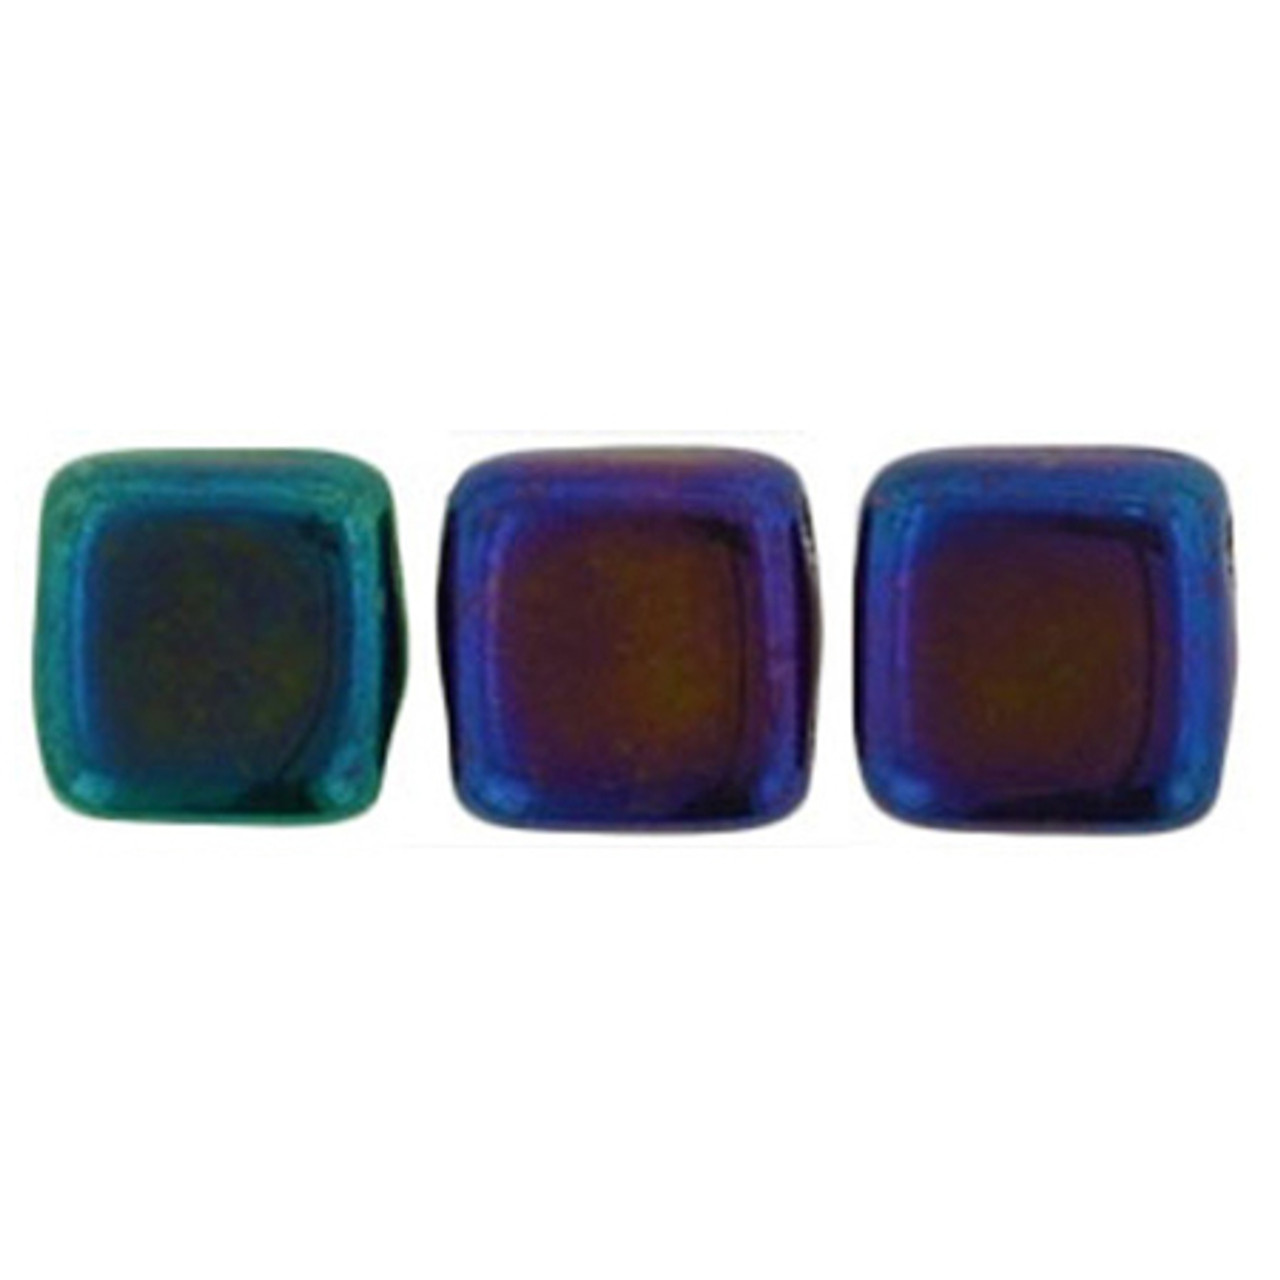 6mm 2-Hole Matte Iris Blue Tile Beads - 50pk - Off the Beaded Path